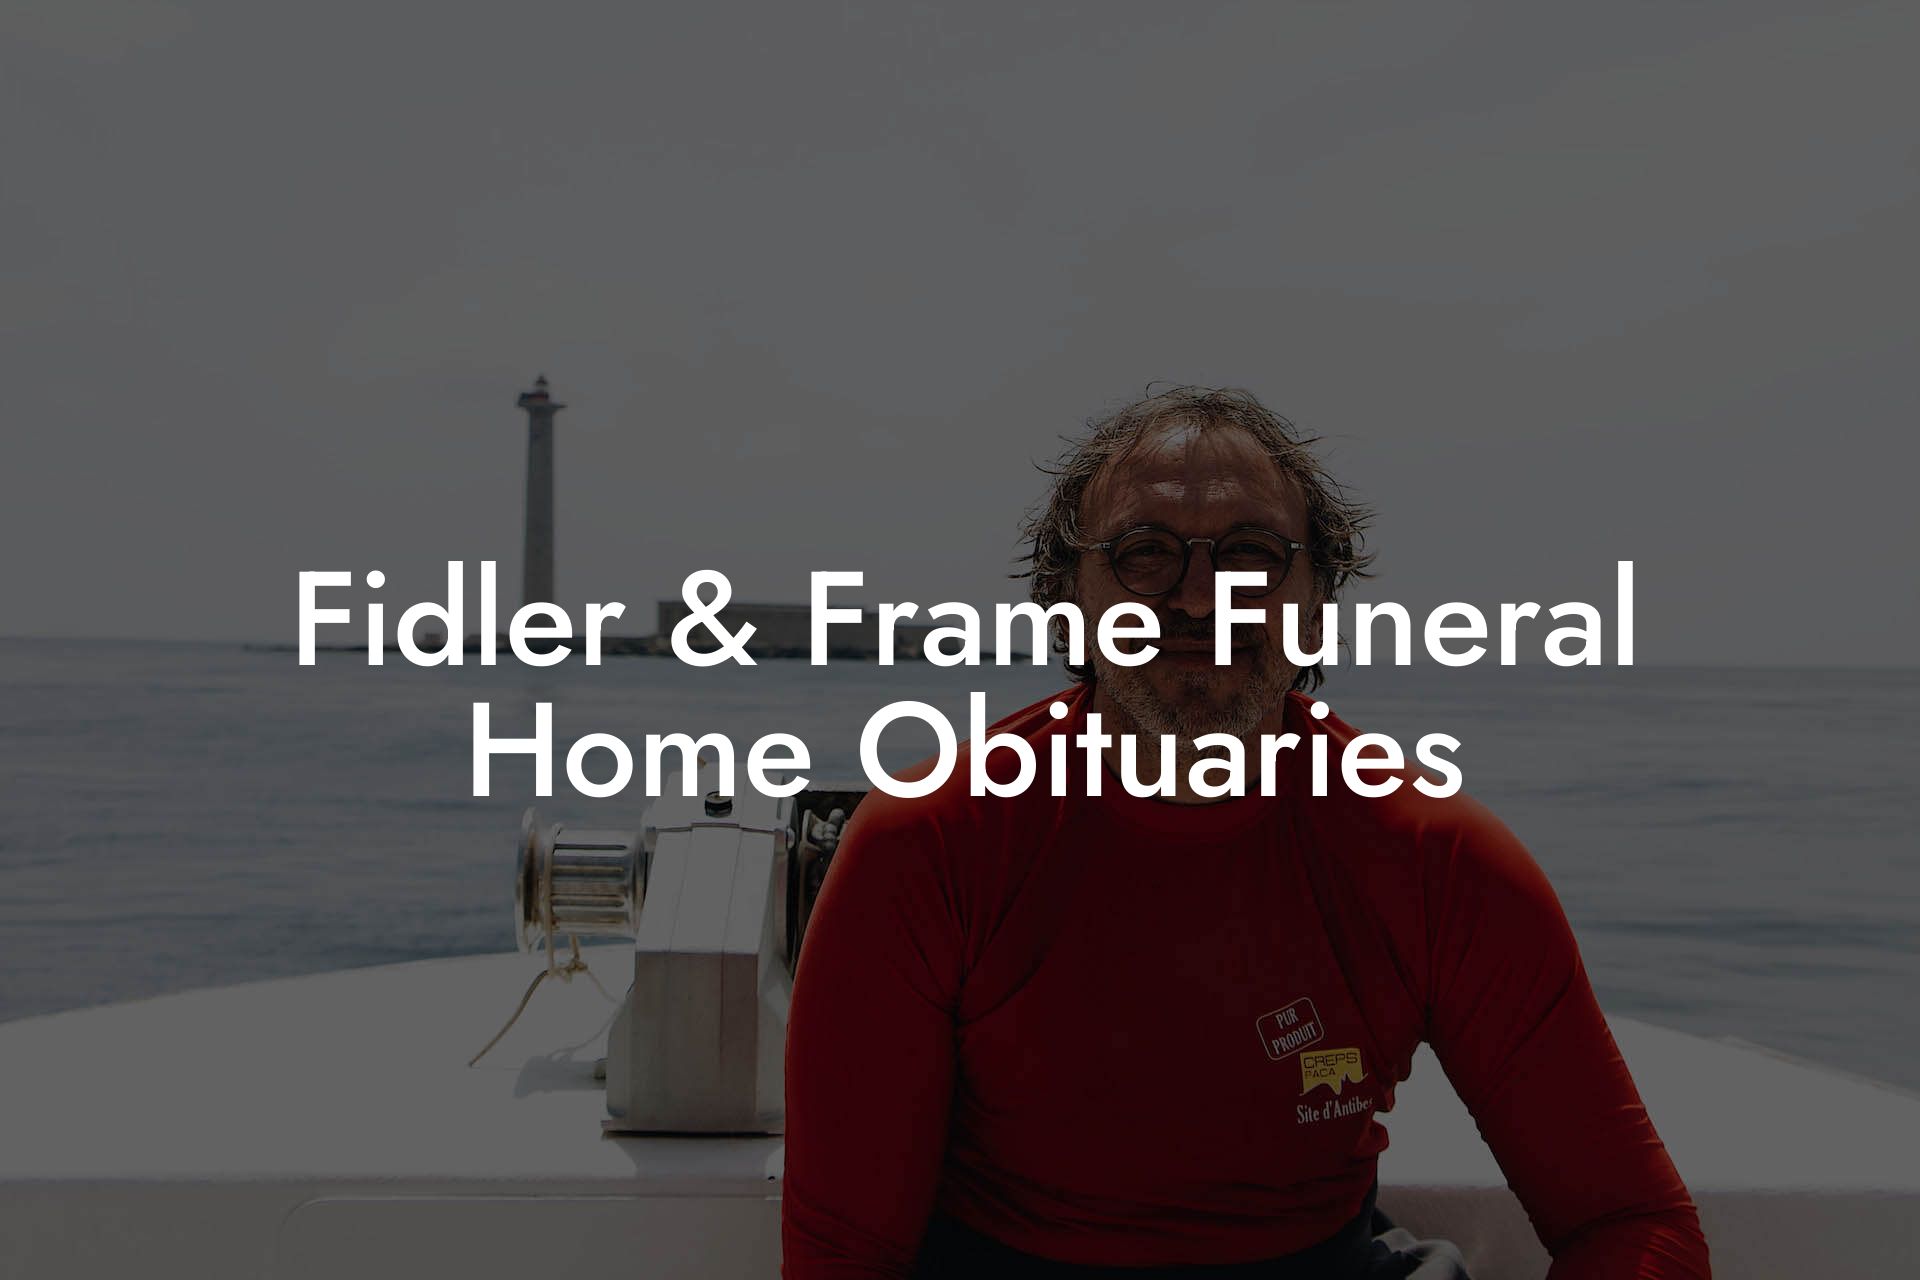 Fidler & Frame Funeral Home Obituaries